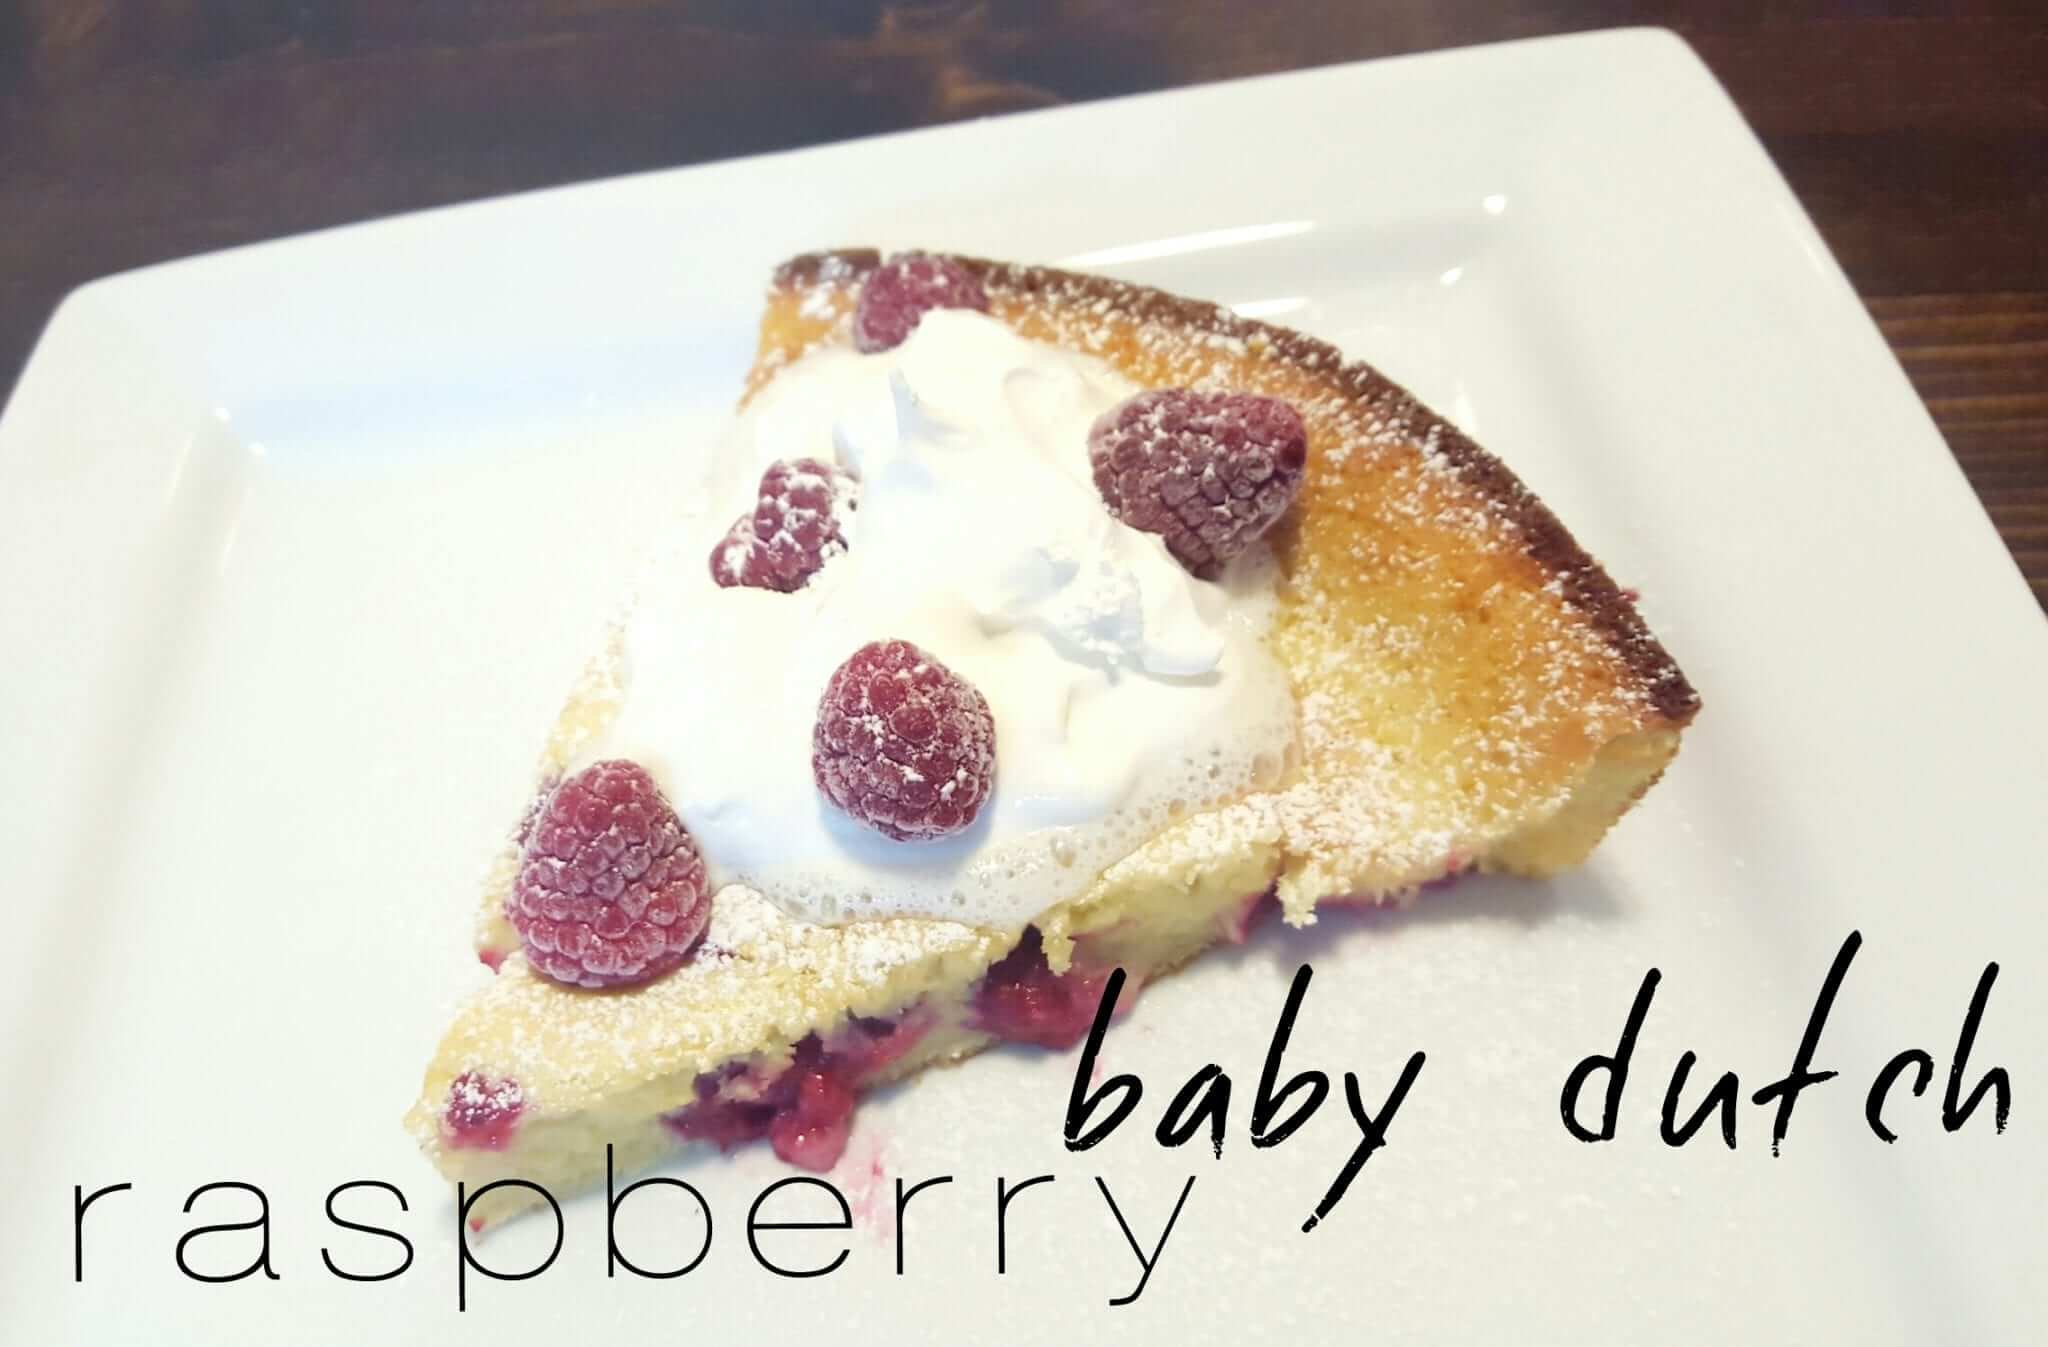 raspberry baby dutch